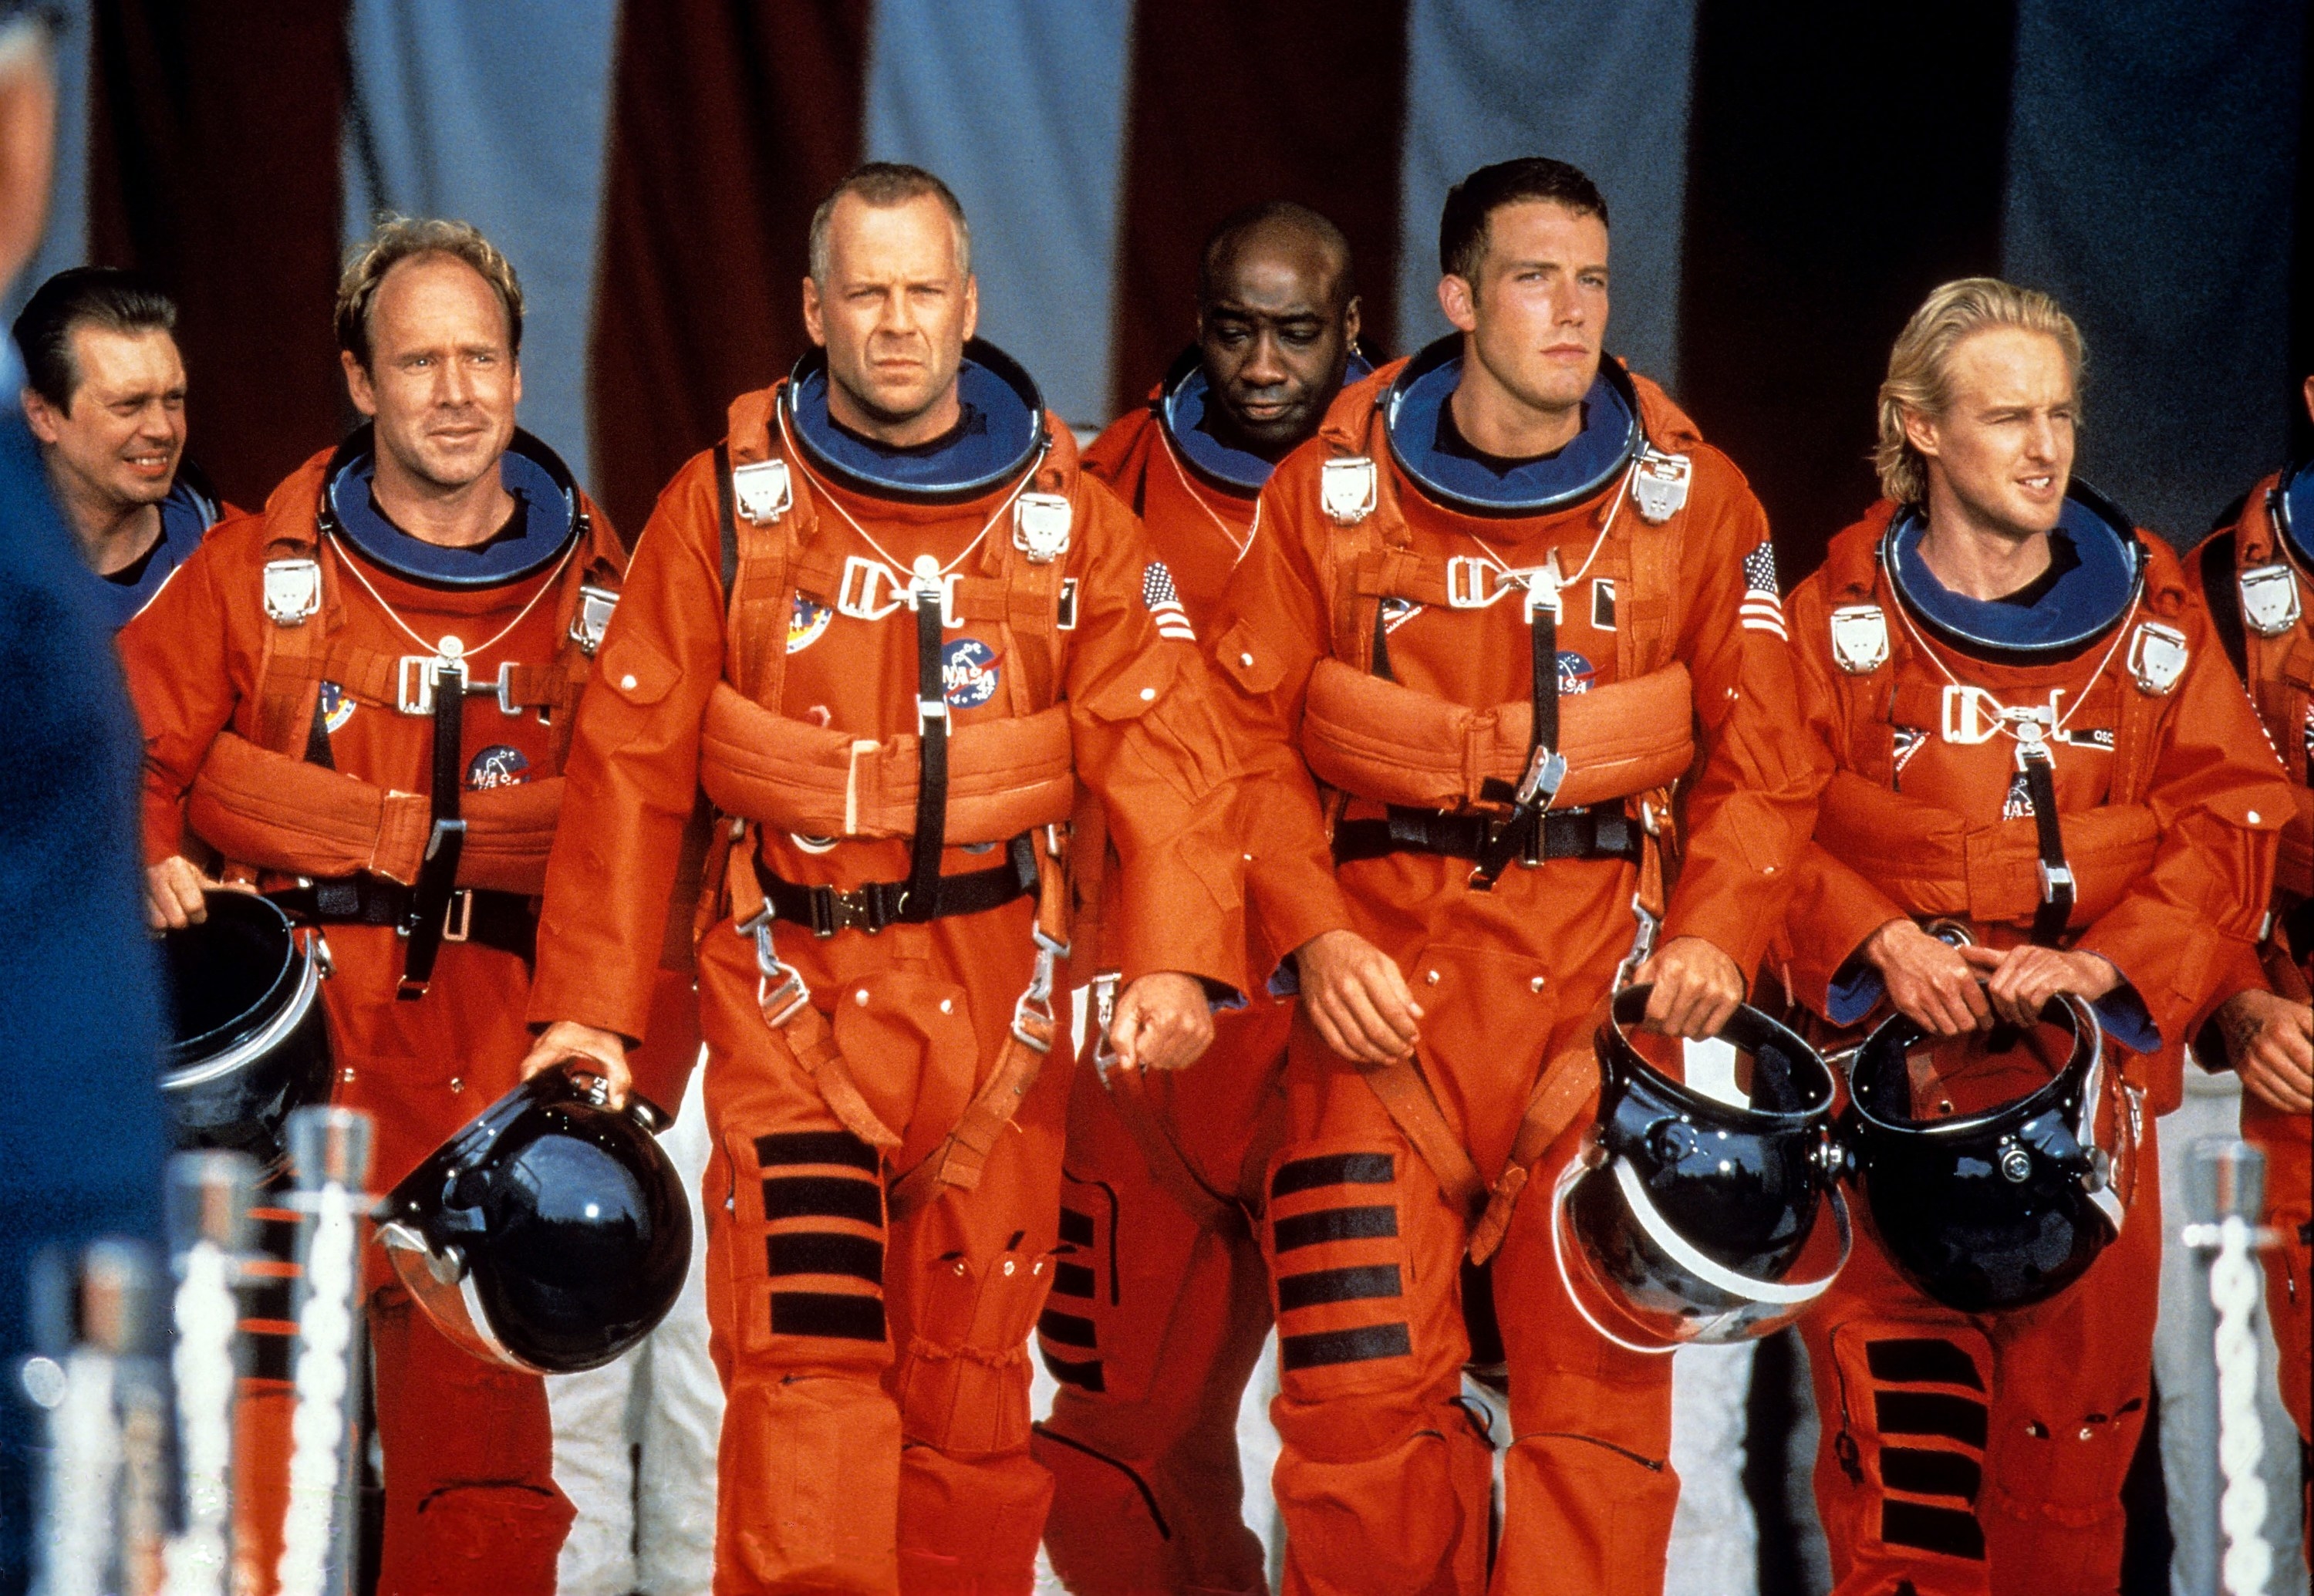 A group of men in astronaut uniforms walk toward a shuttle